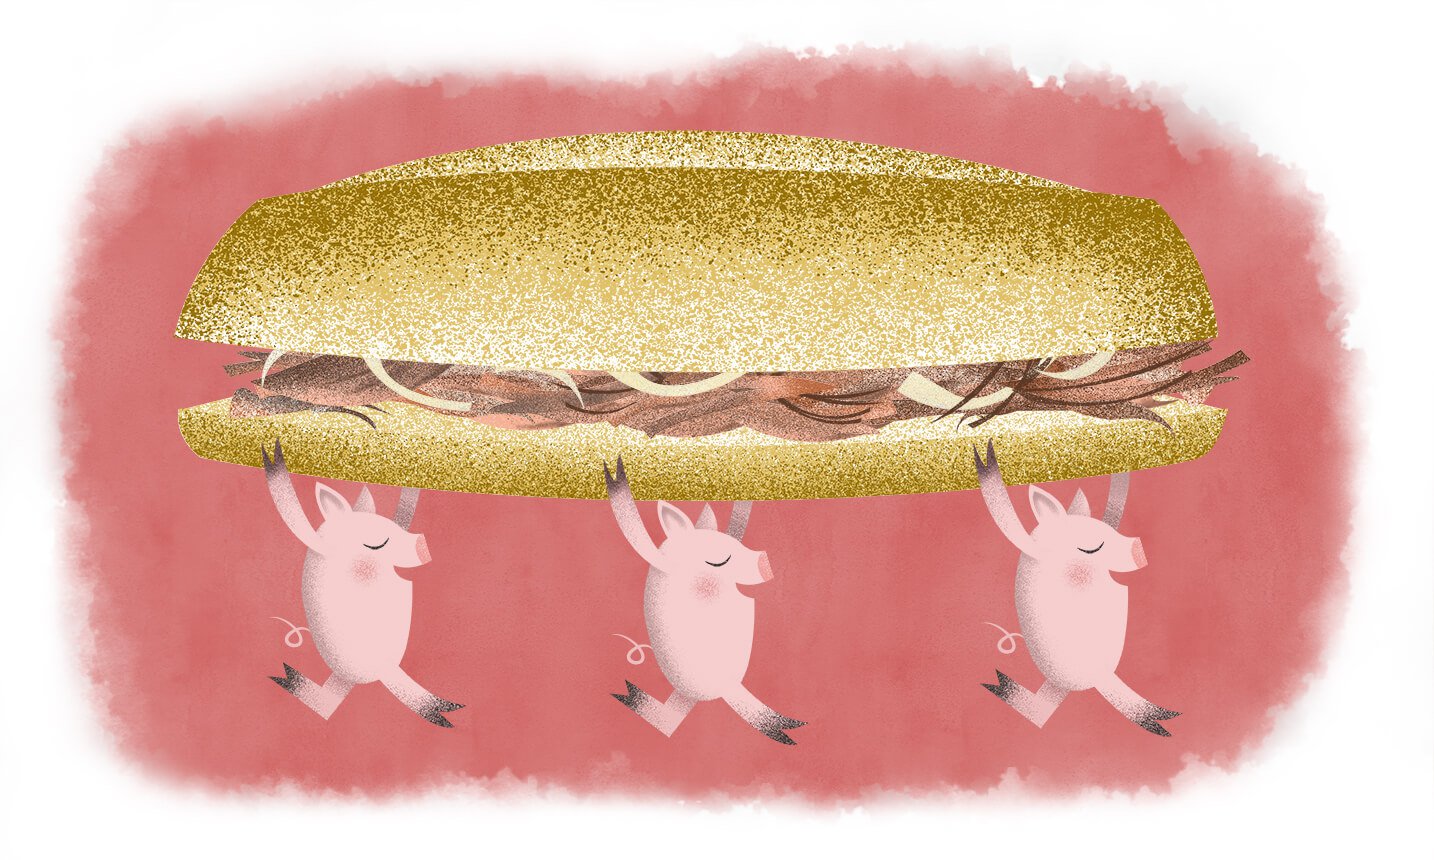 Three pigs carry a sandwich